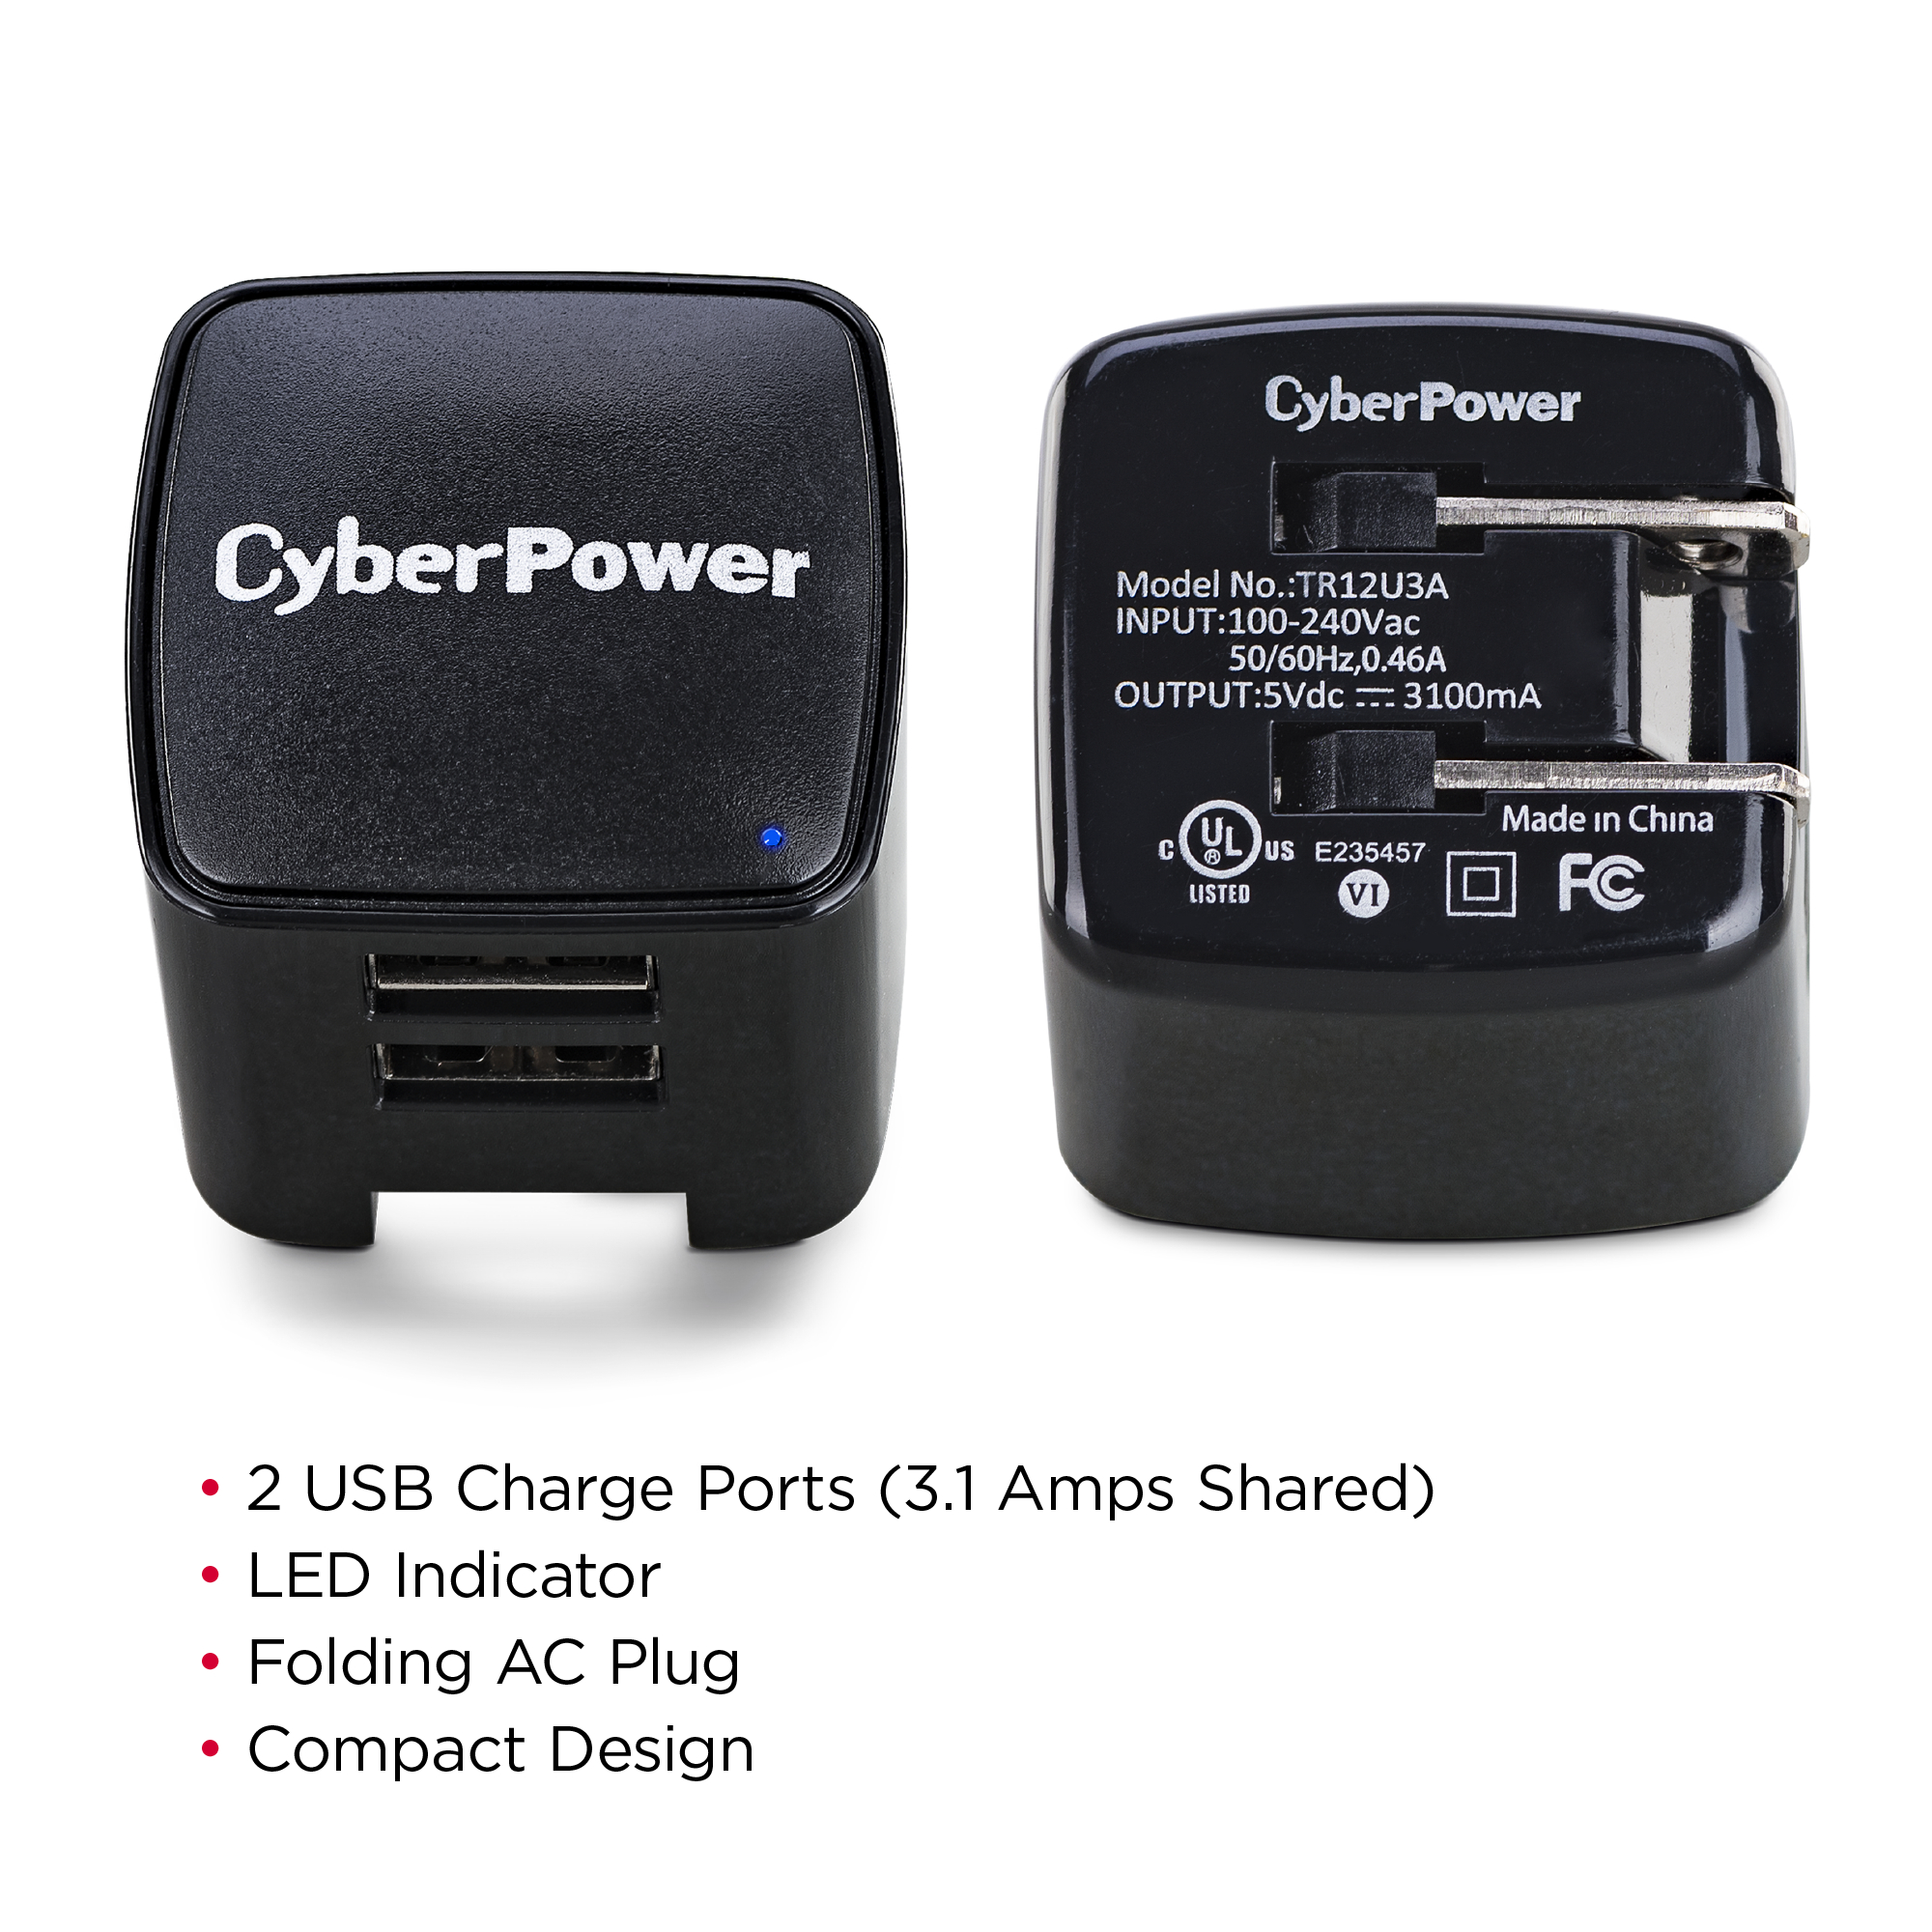 LED Light-Up Car Charger w/ 2 USB Ports, 3.1 Amp